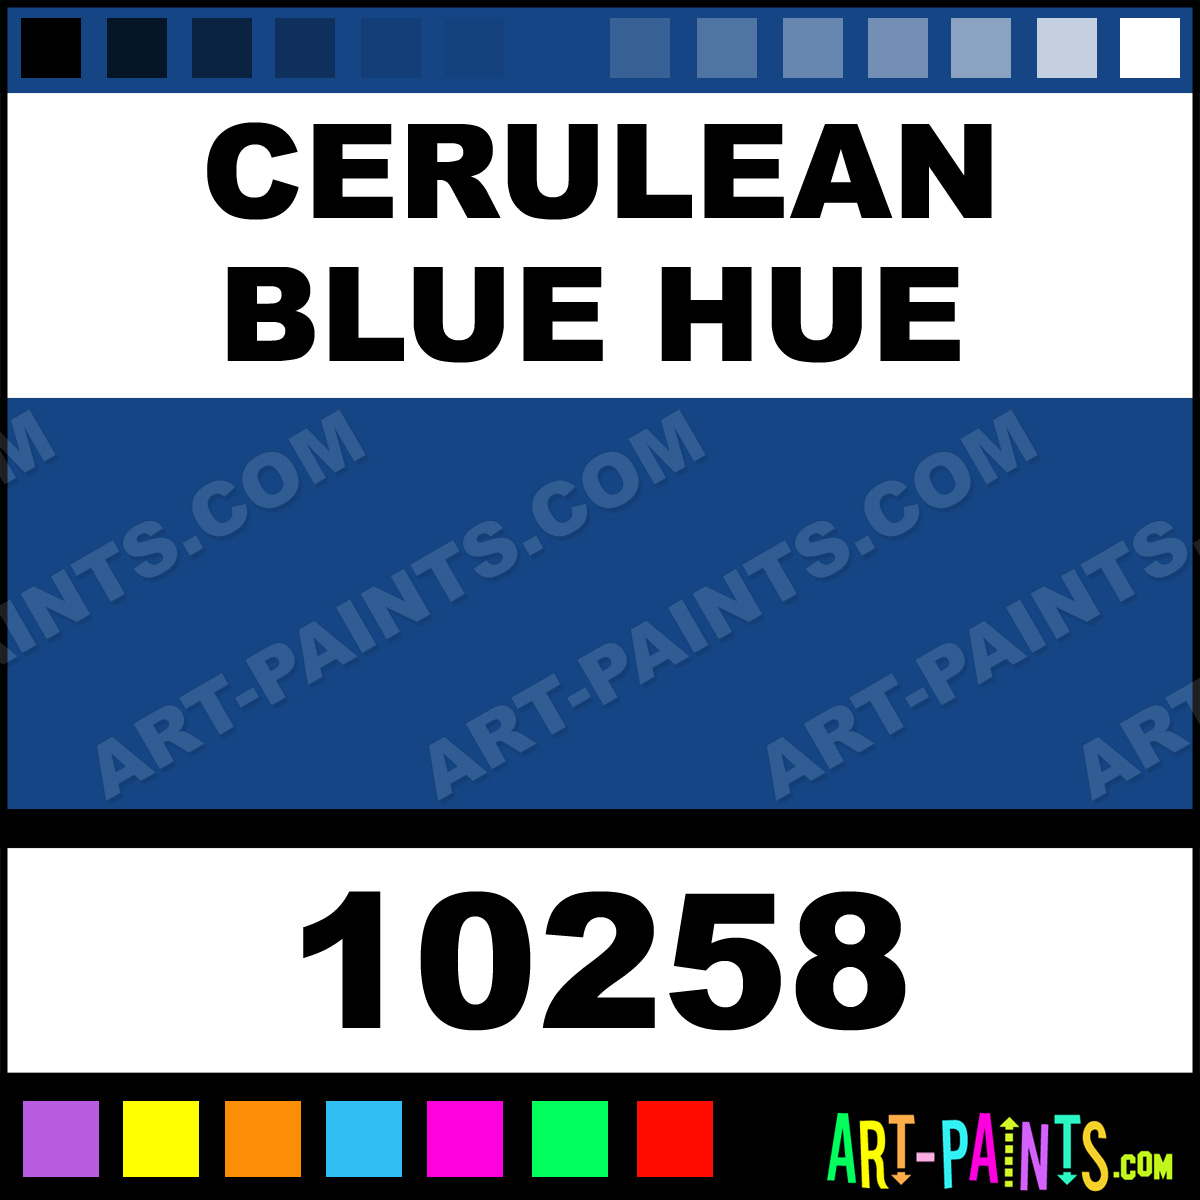 Cerulean-Blue-Hue-lg.jpg